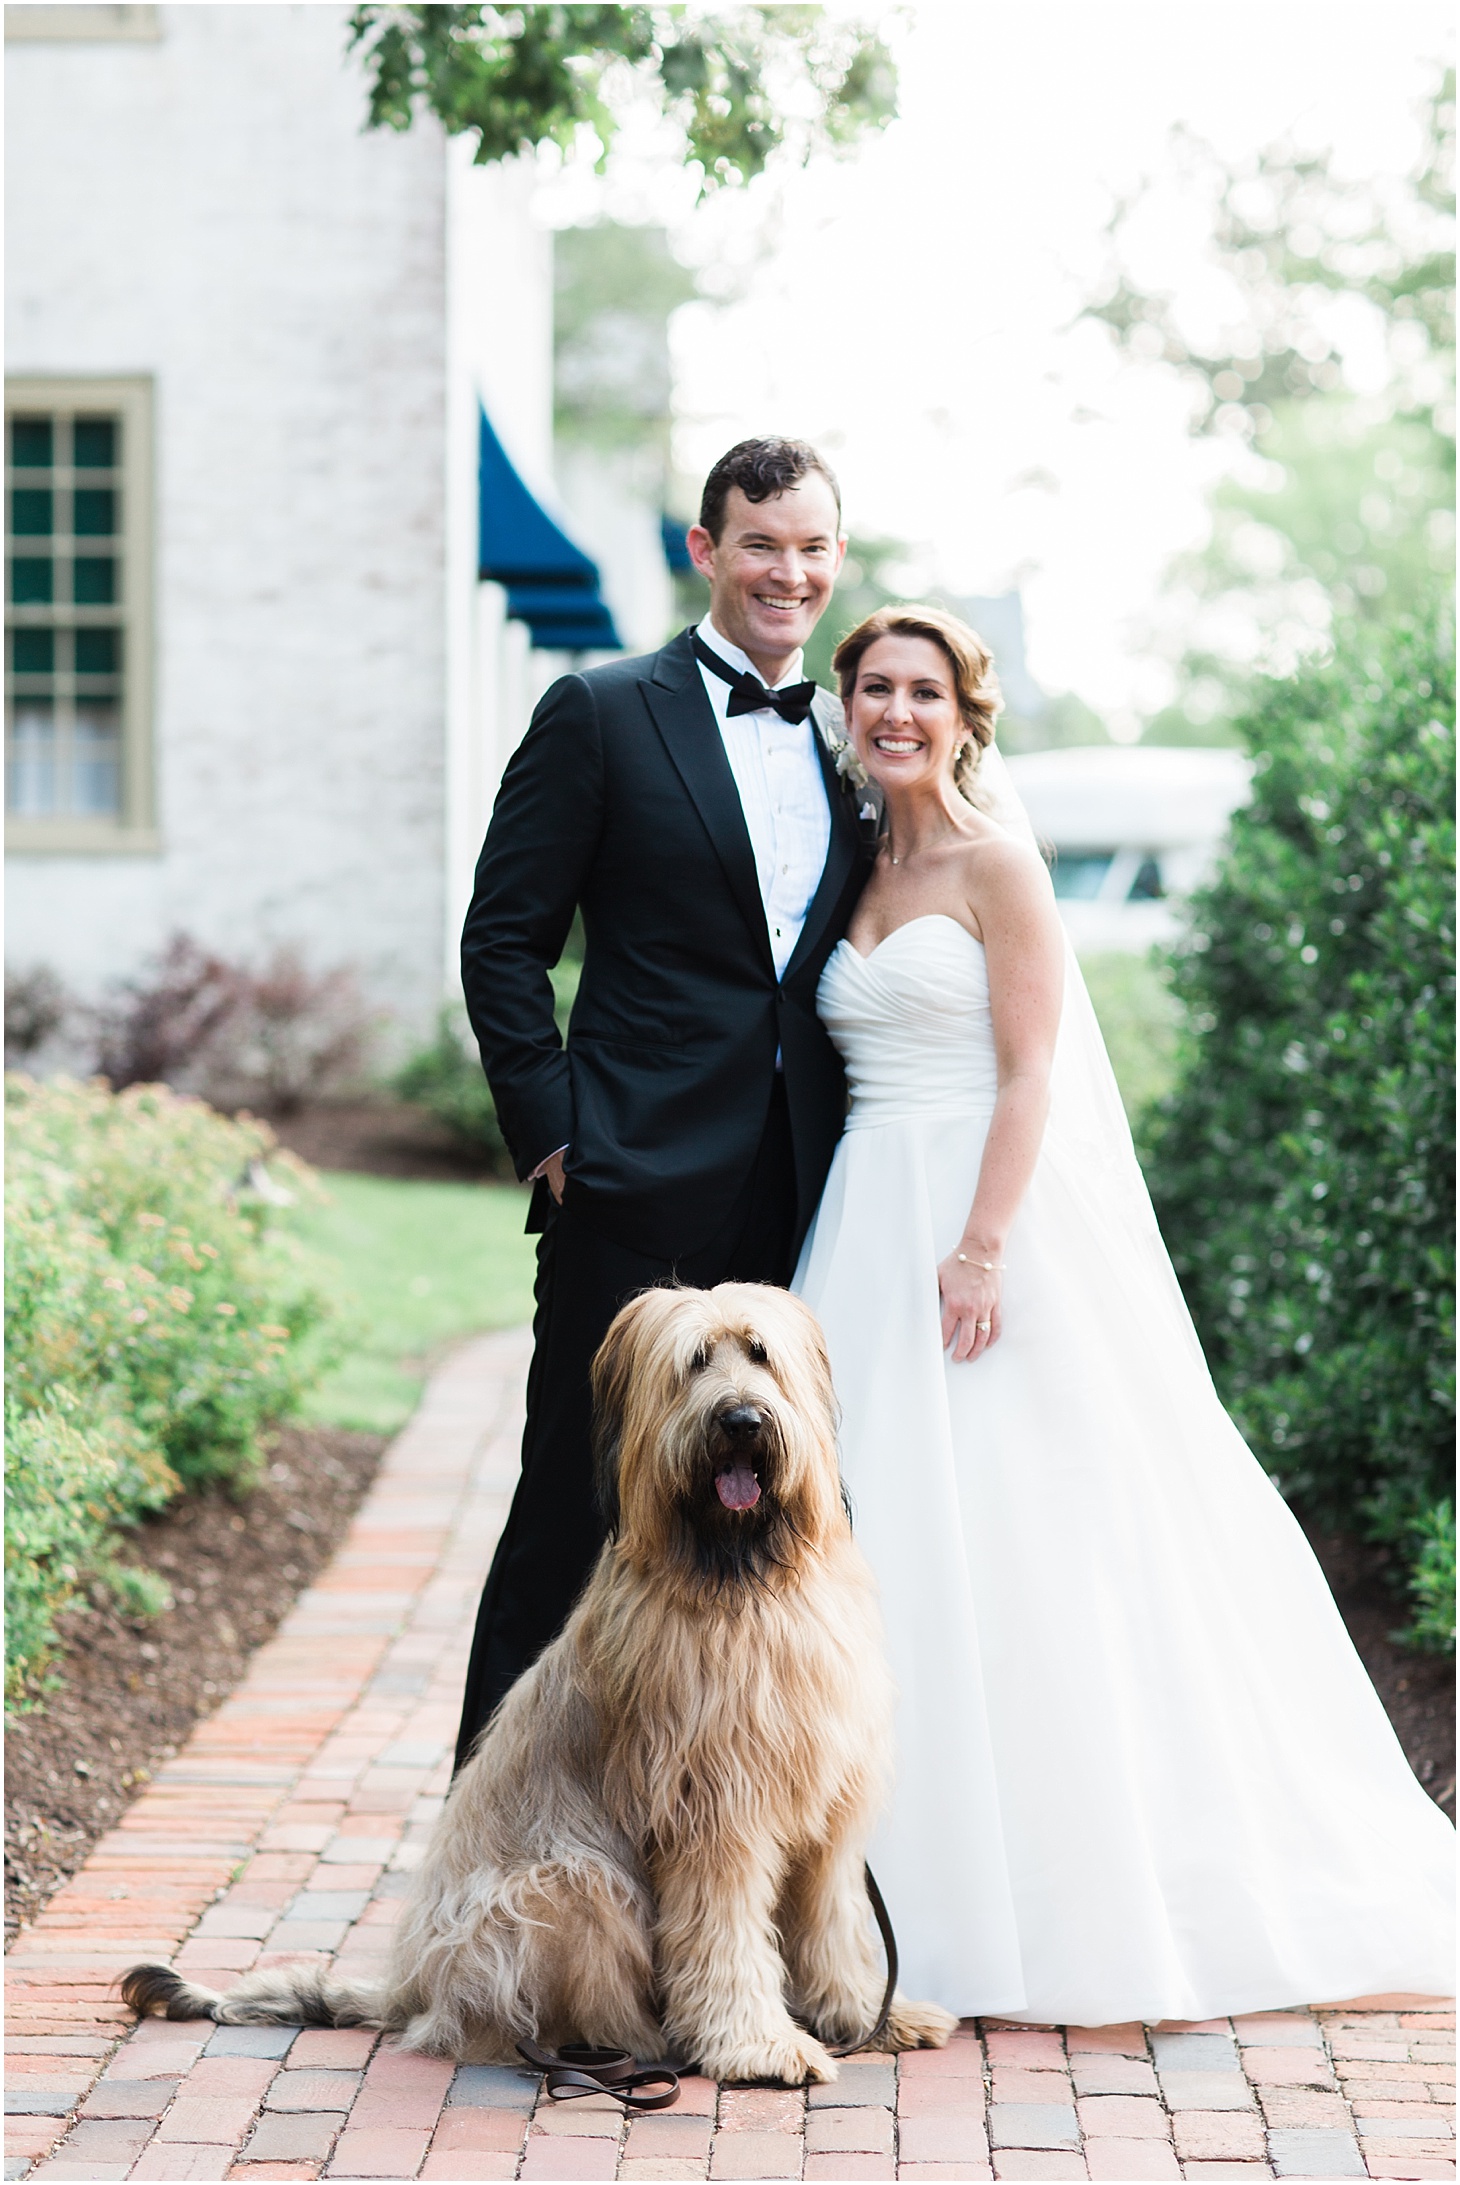 Wedding Portrait with Dog at Williamsburg Inn | Wedding Ceremony at St. Olaf Catholic Church | Blush and Black Tie Wedding in Williamsburg, VA | Sarah Bradshaw Photography